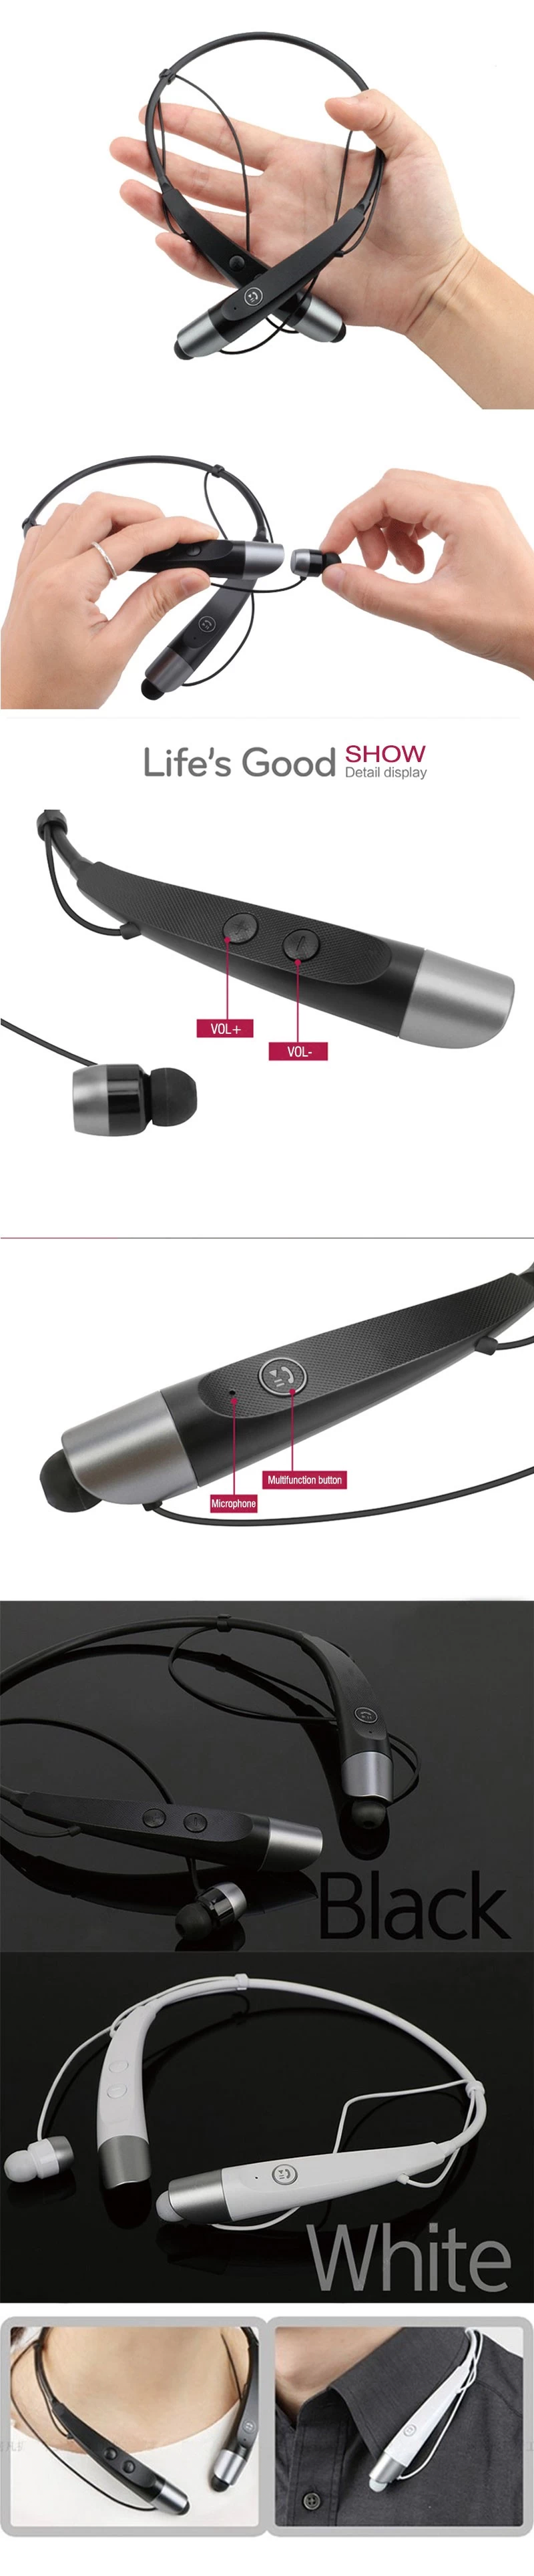 Neckband Bluetooth Earphones Supplier